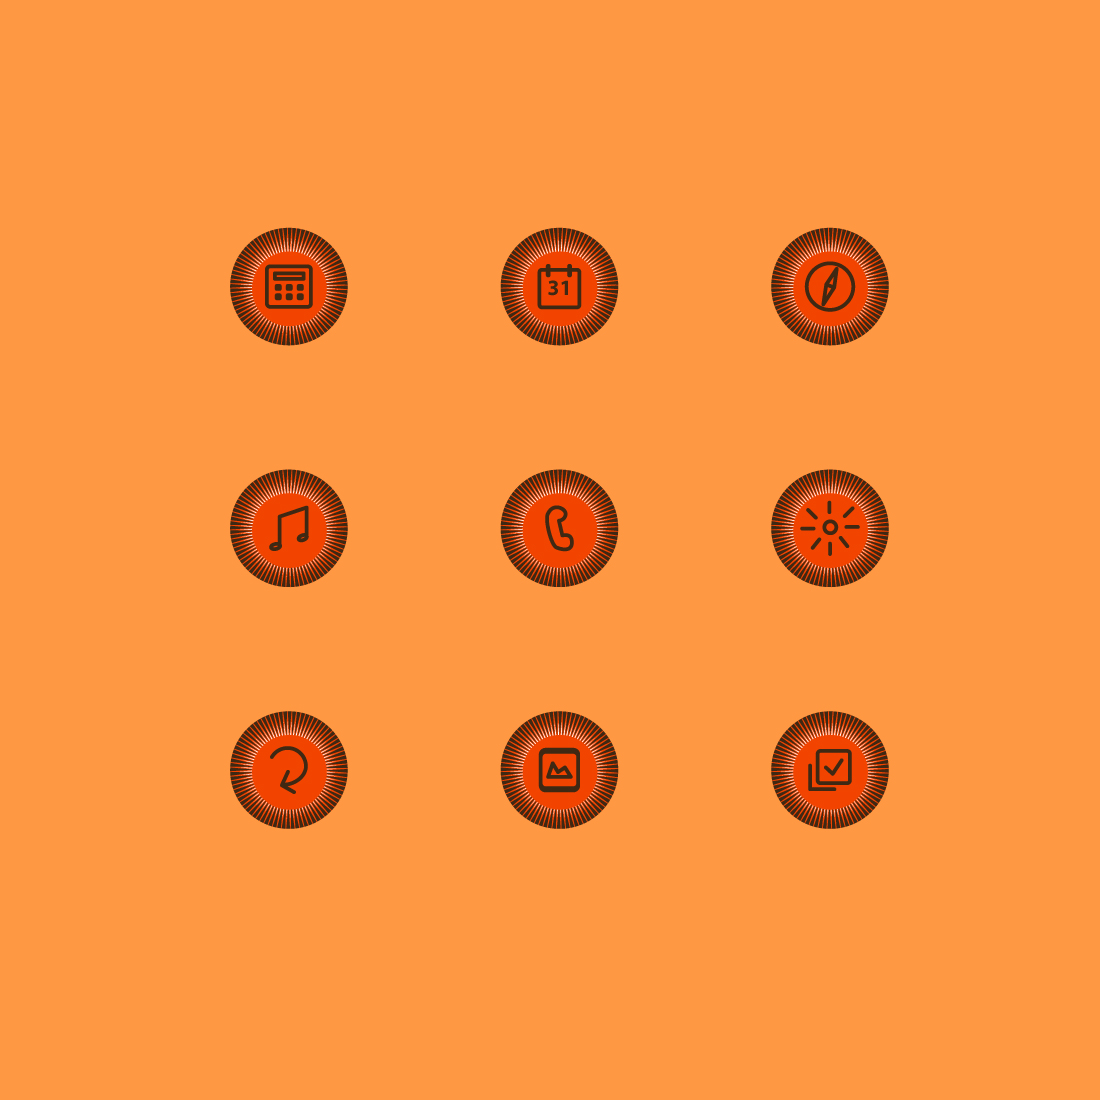 Free orange app icons cover image.